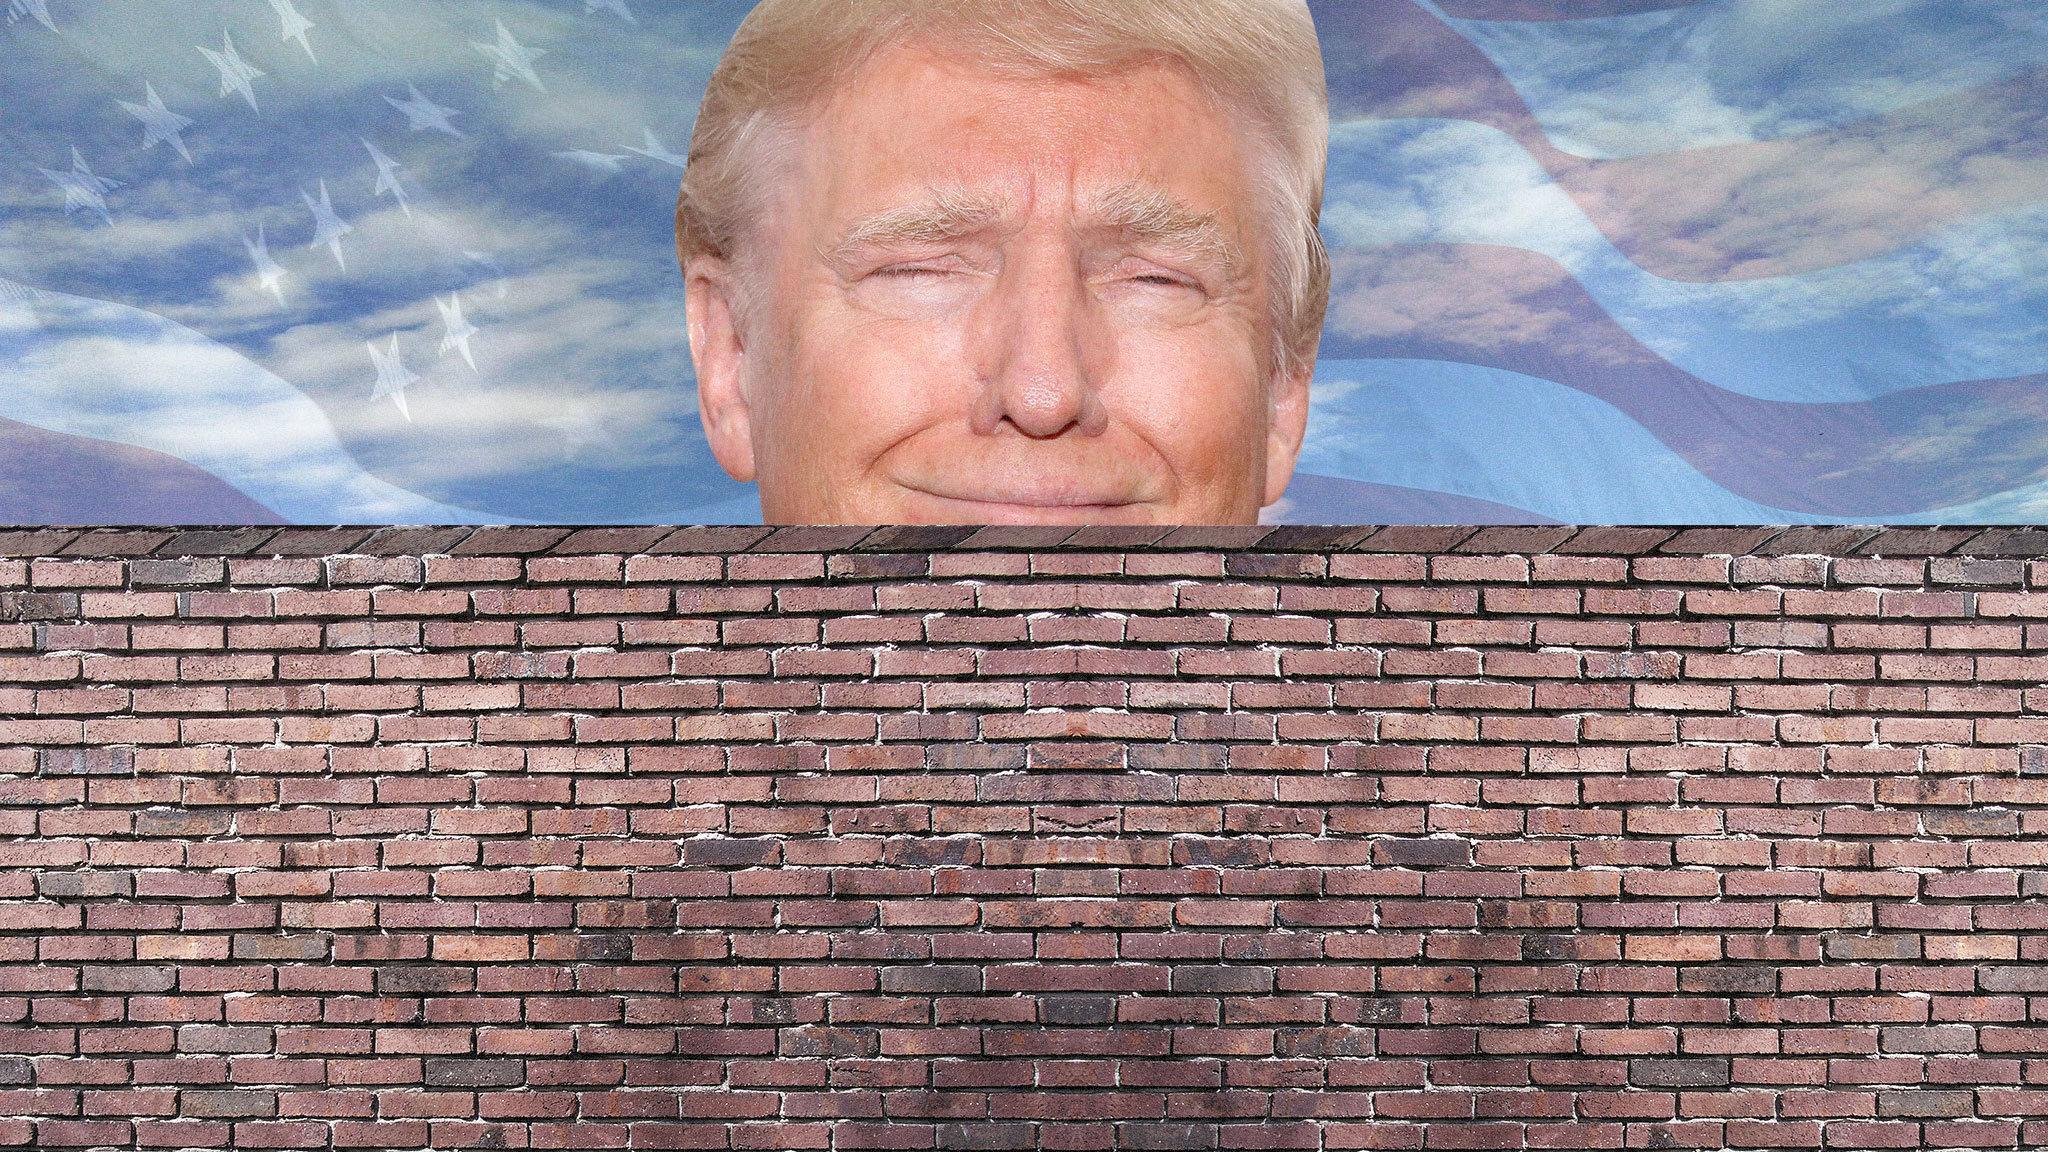 Now Donald Trump Revealed Wallpaper 2048x1152. Free Photo